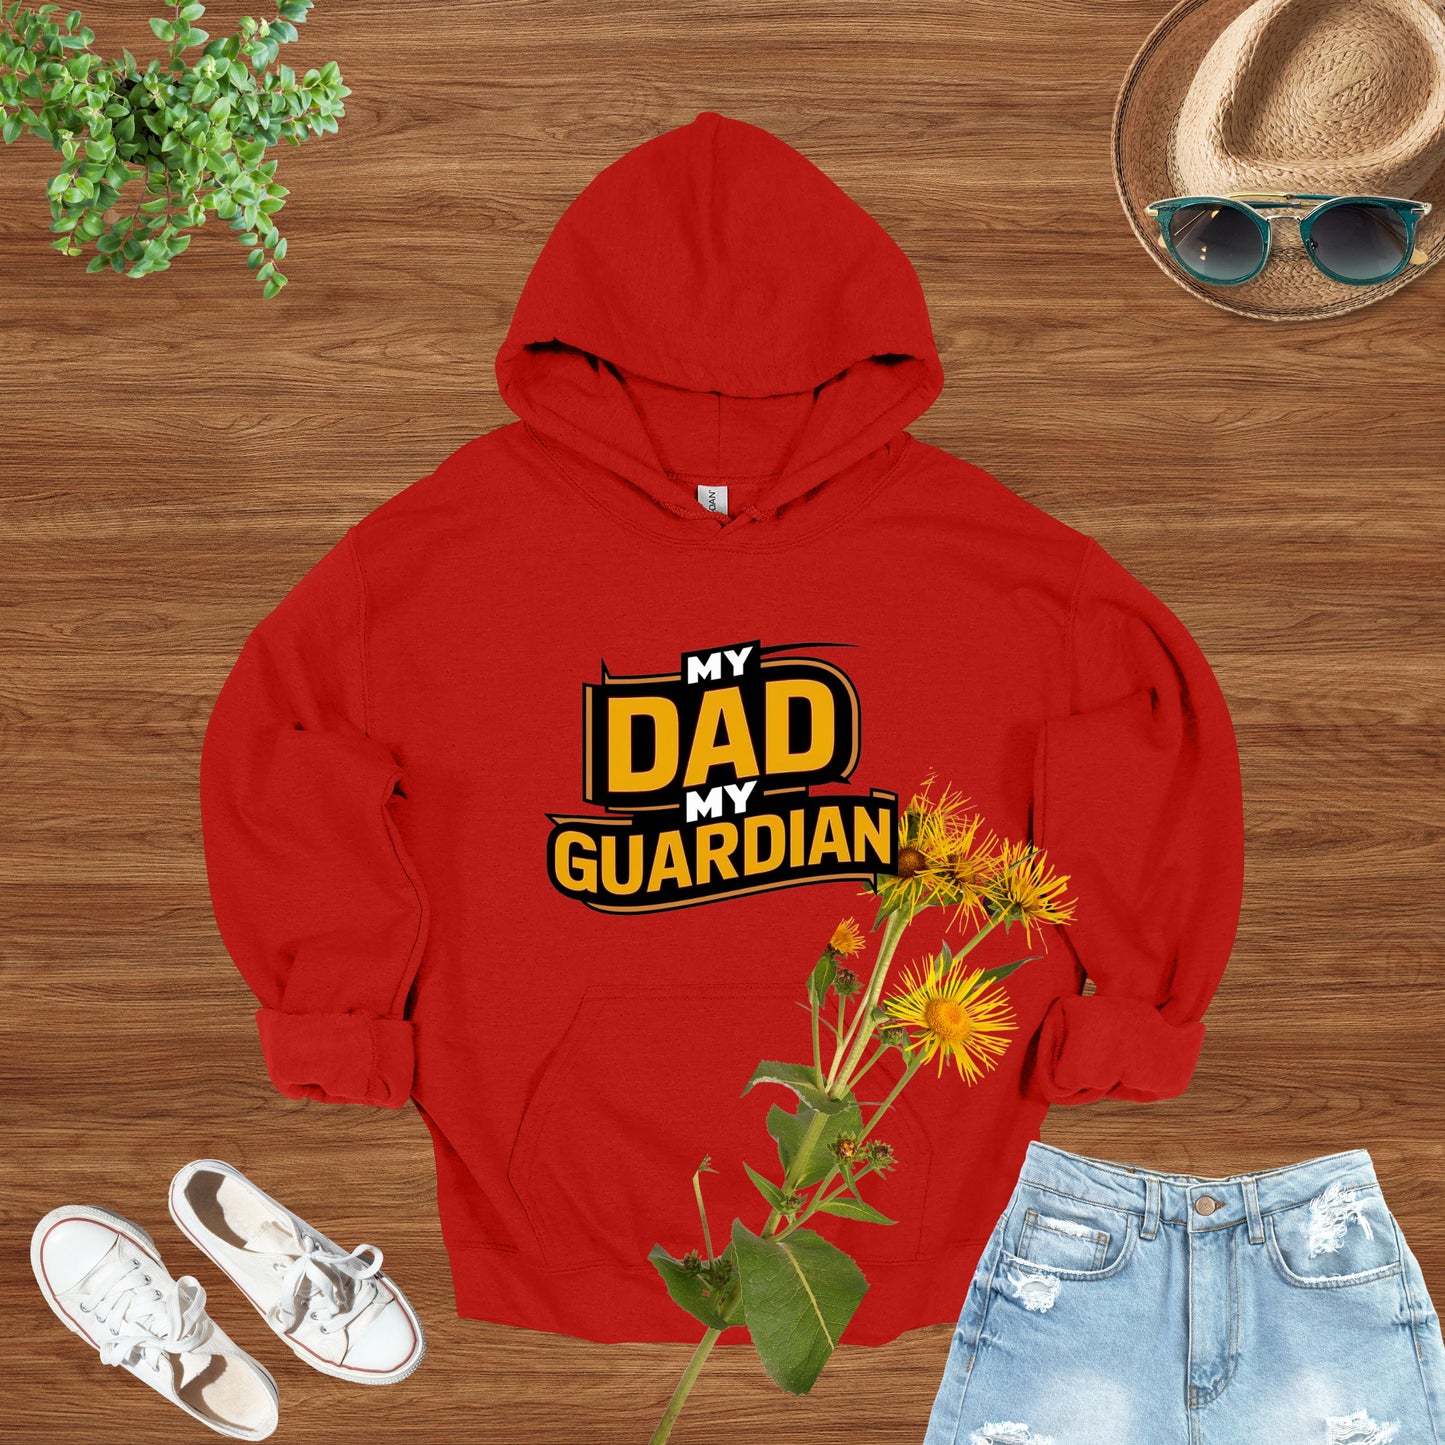 My Dad My Guardian Red Hoodie